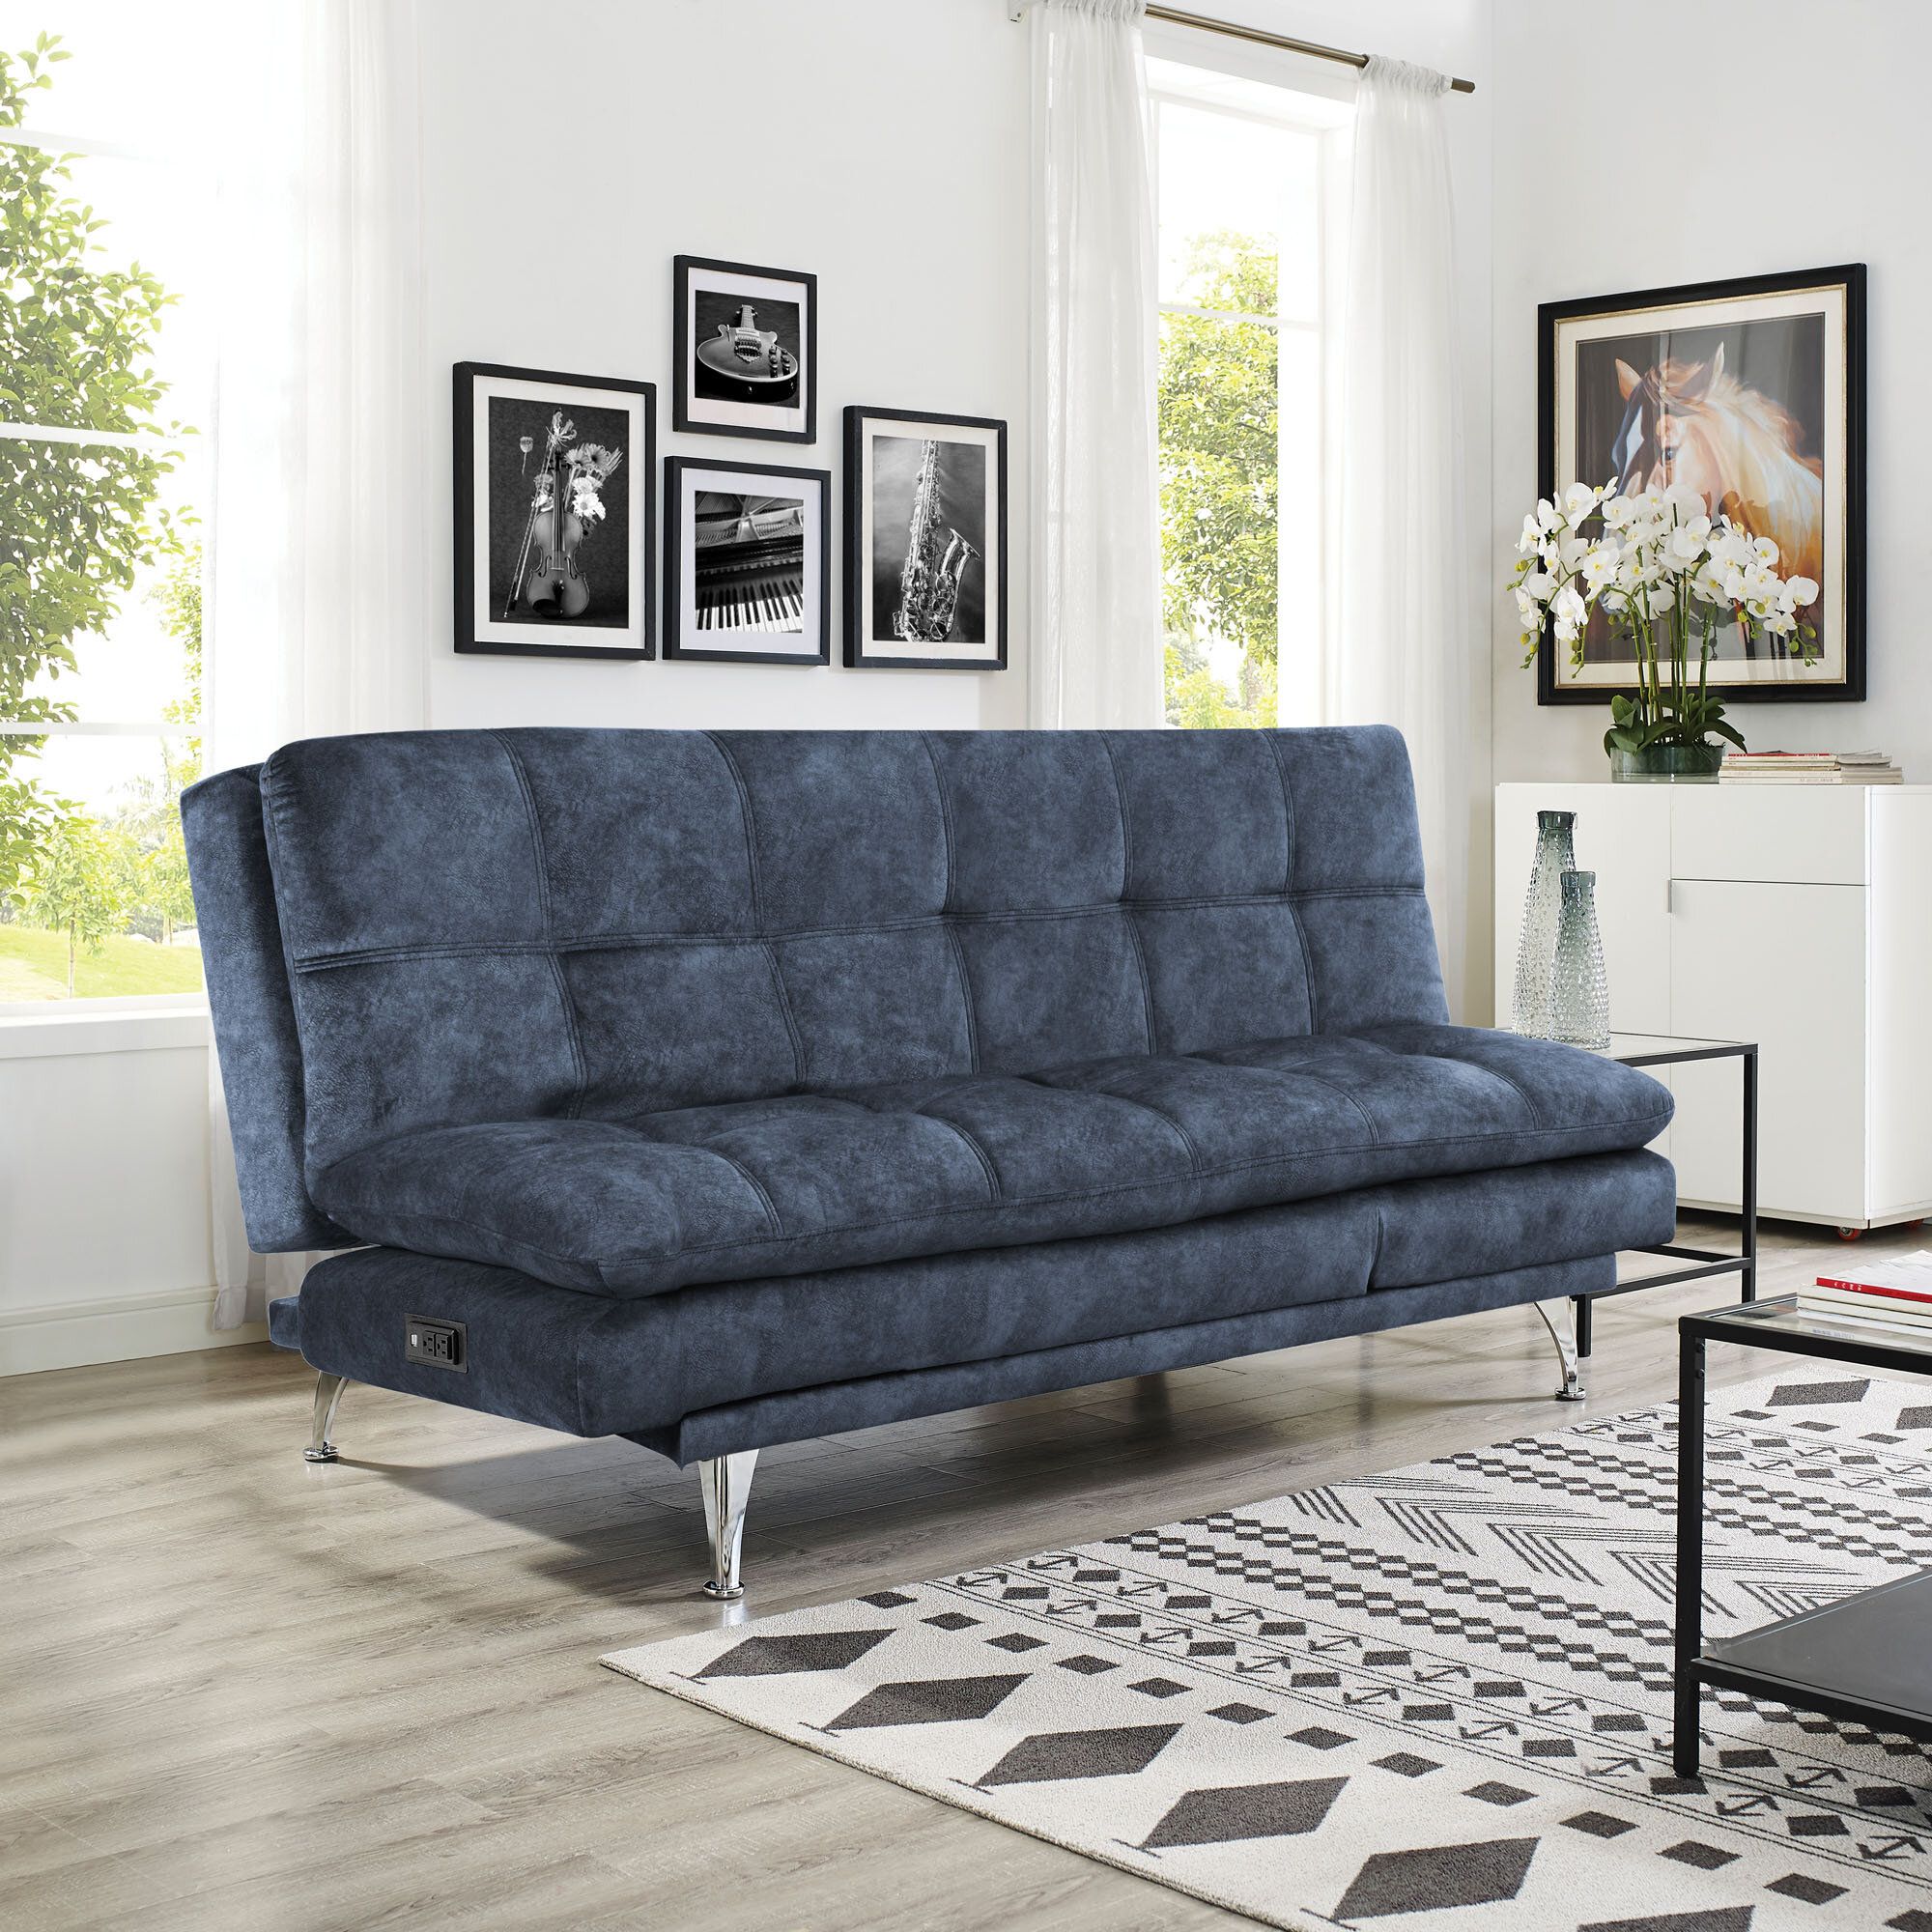 Serta Reuben 78.7'' Tufted Multi Functional Convertible Sleeper Sofa &  Reviews | Wayfair With Regard To Tufted Convertible Sleeper Sofas (Photo 1 of 15)